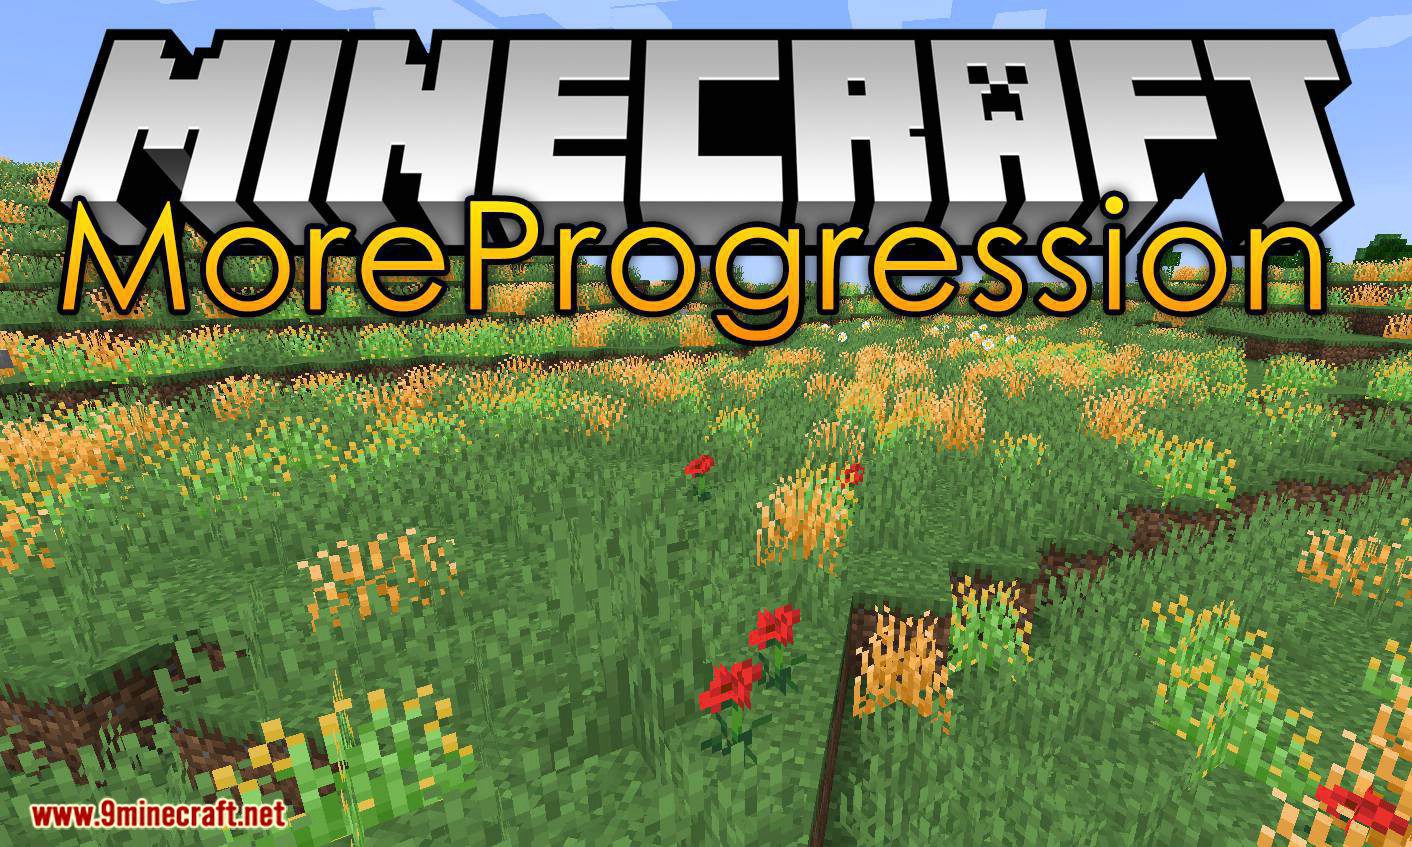 MoreProgression mod for minecraft logo